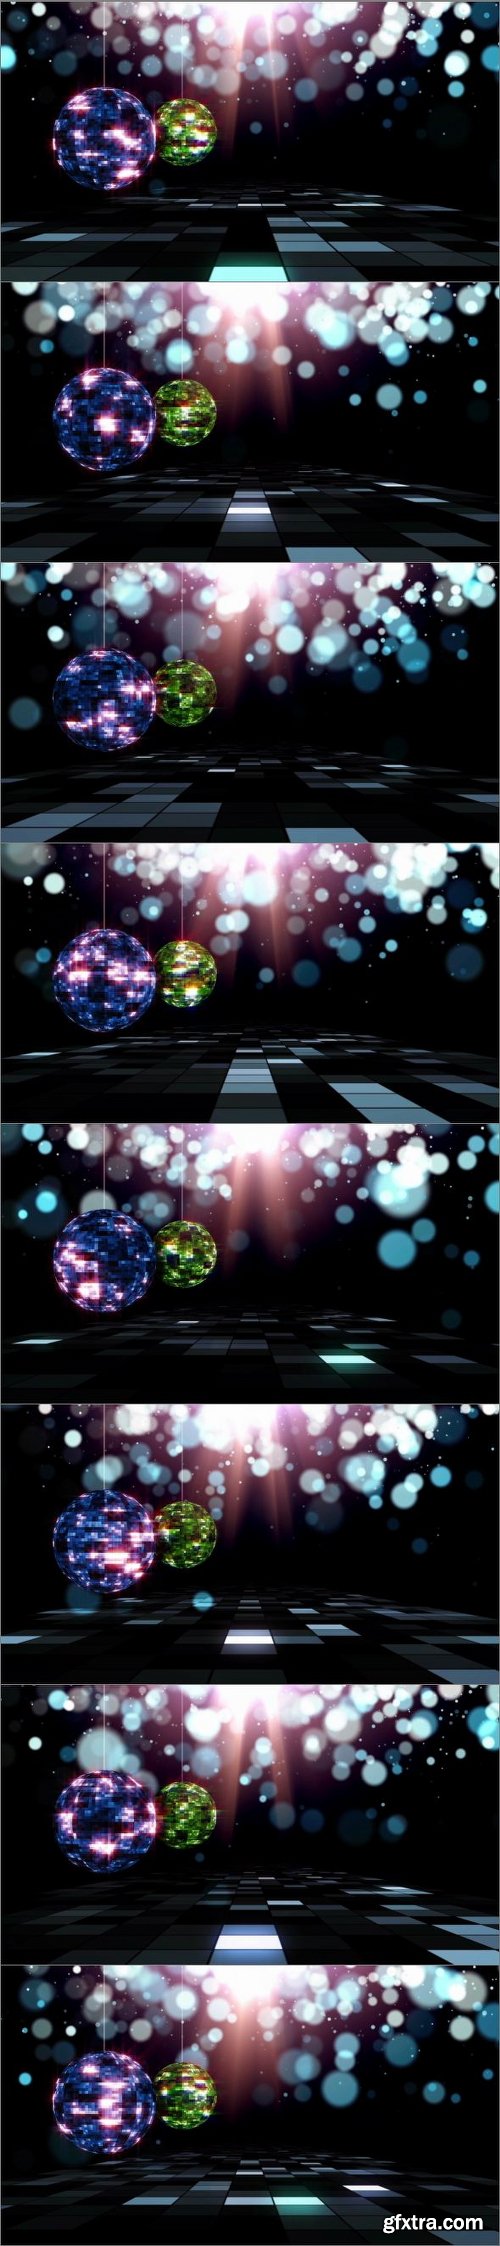 Music Video Background Disco Ball 2